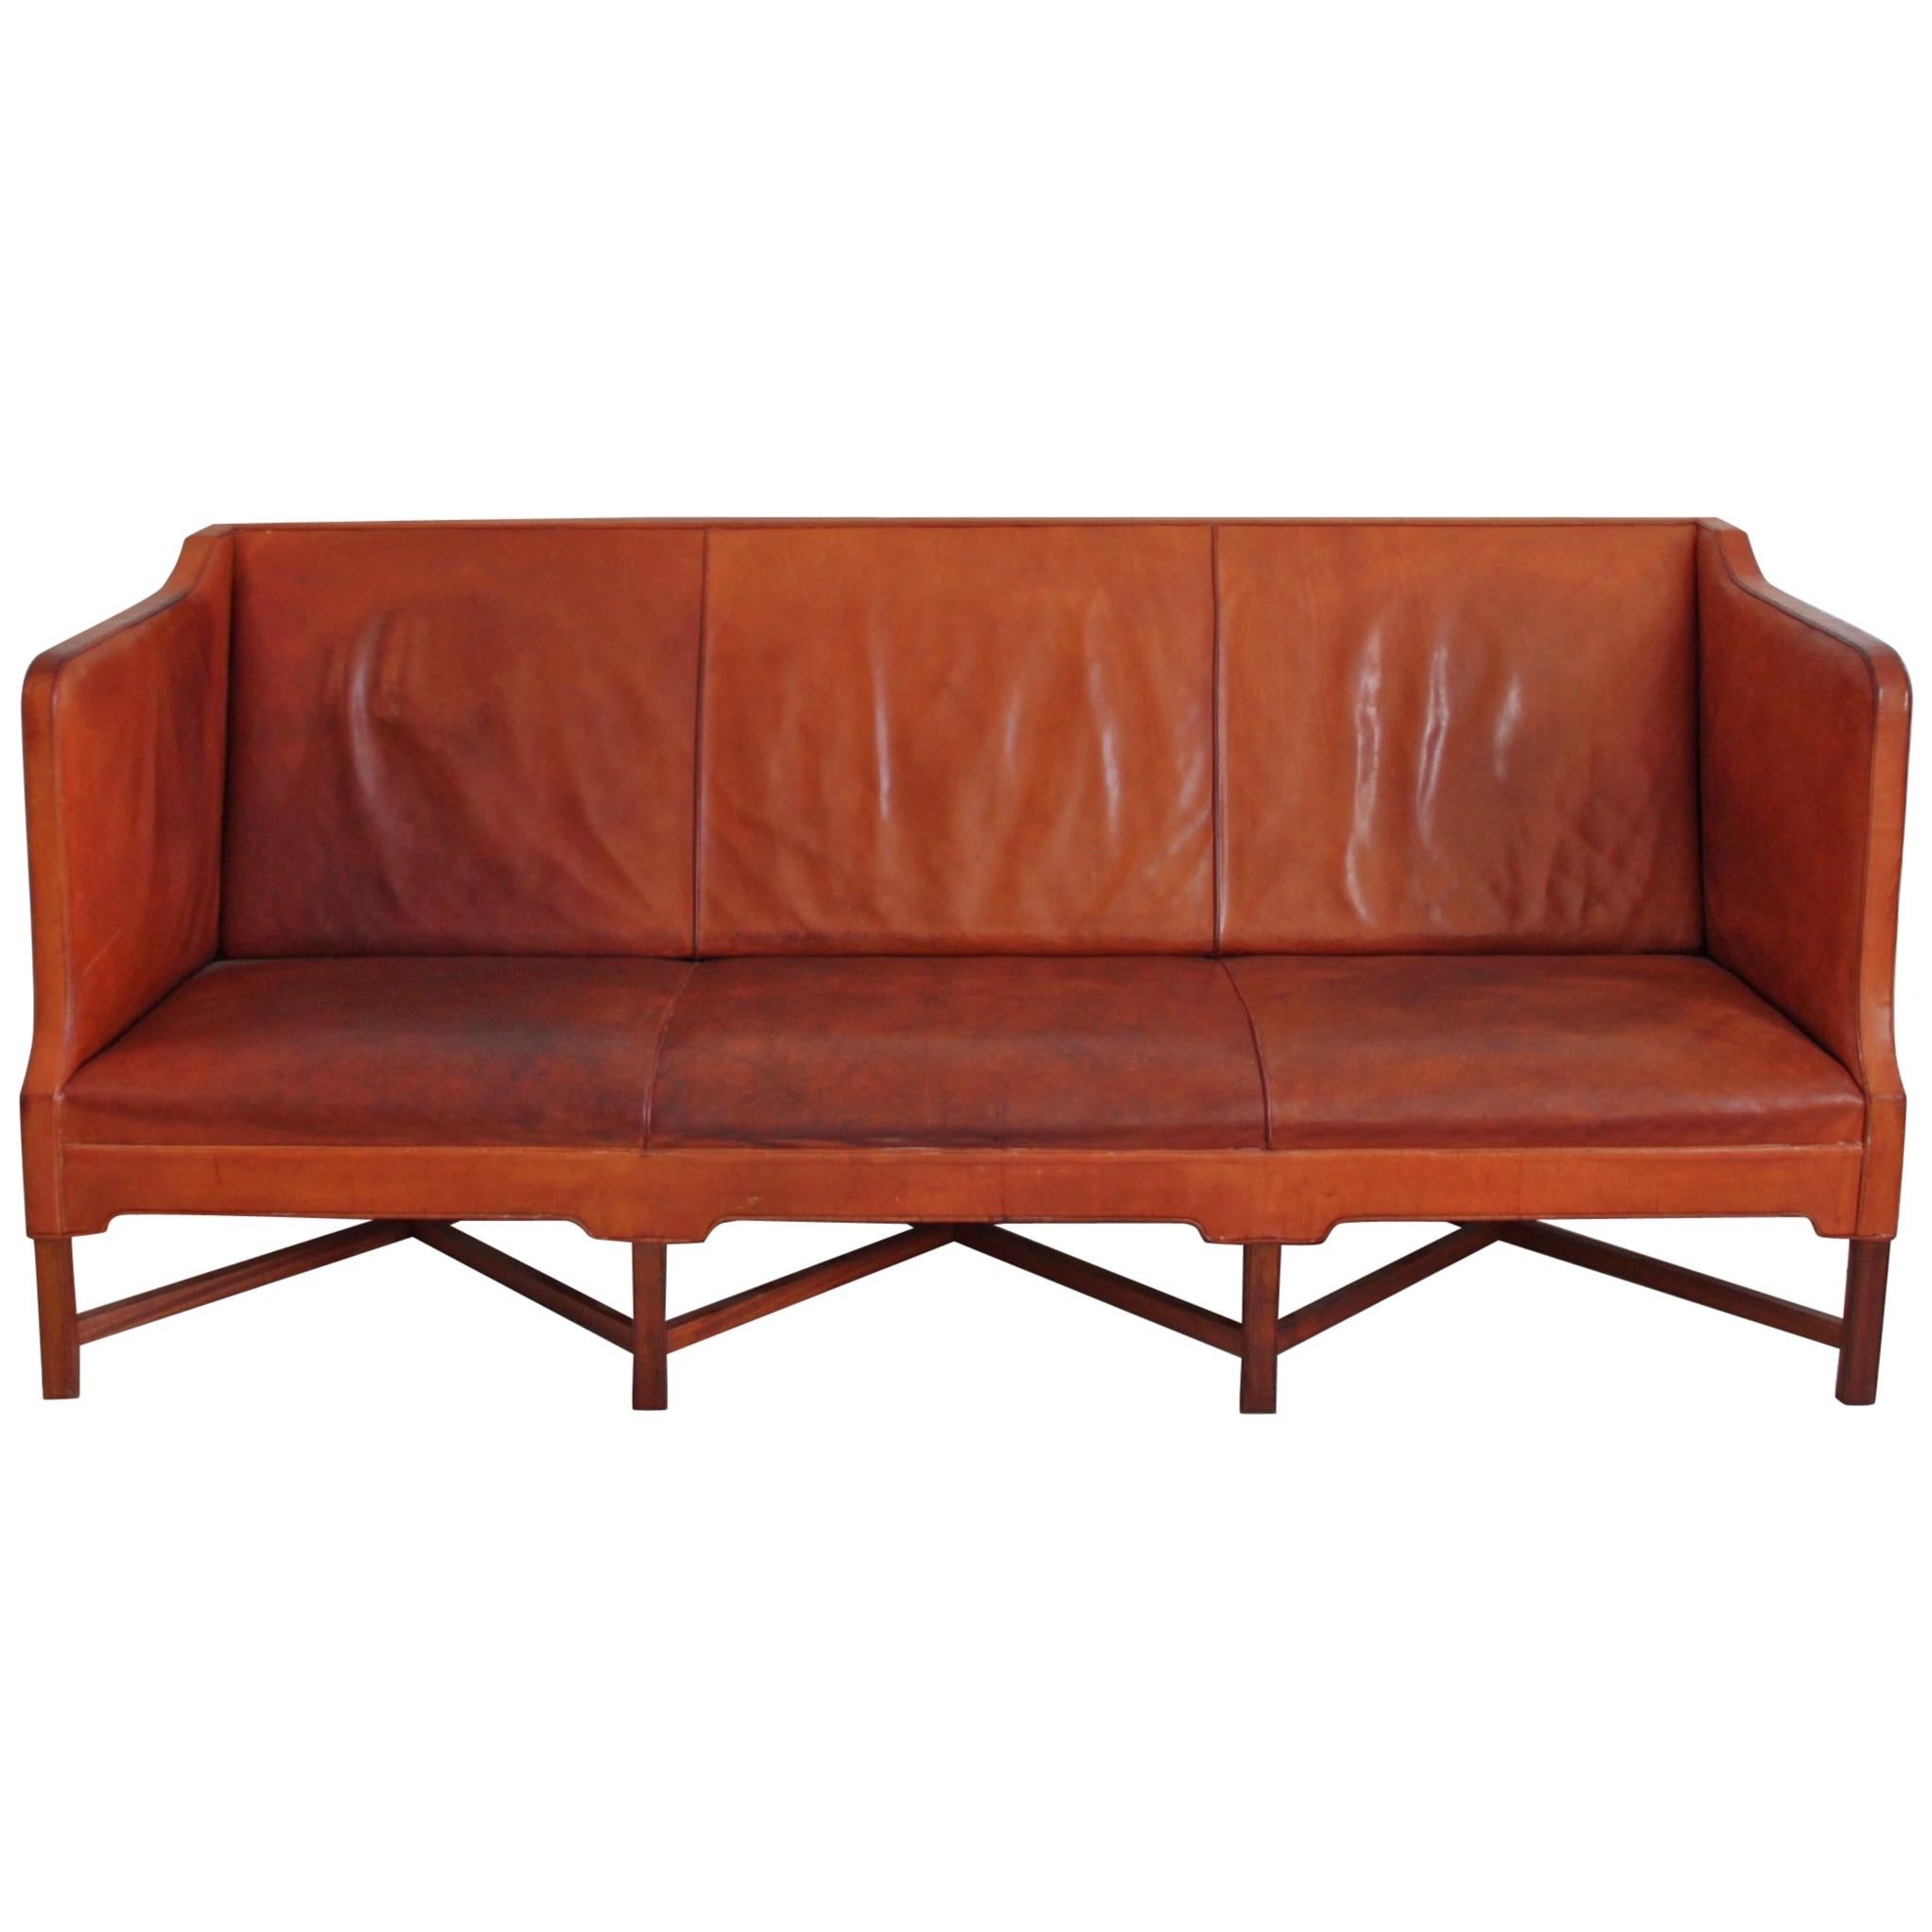 Rare Kaare Klint X-base Sofa in Original Patinated Leather